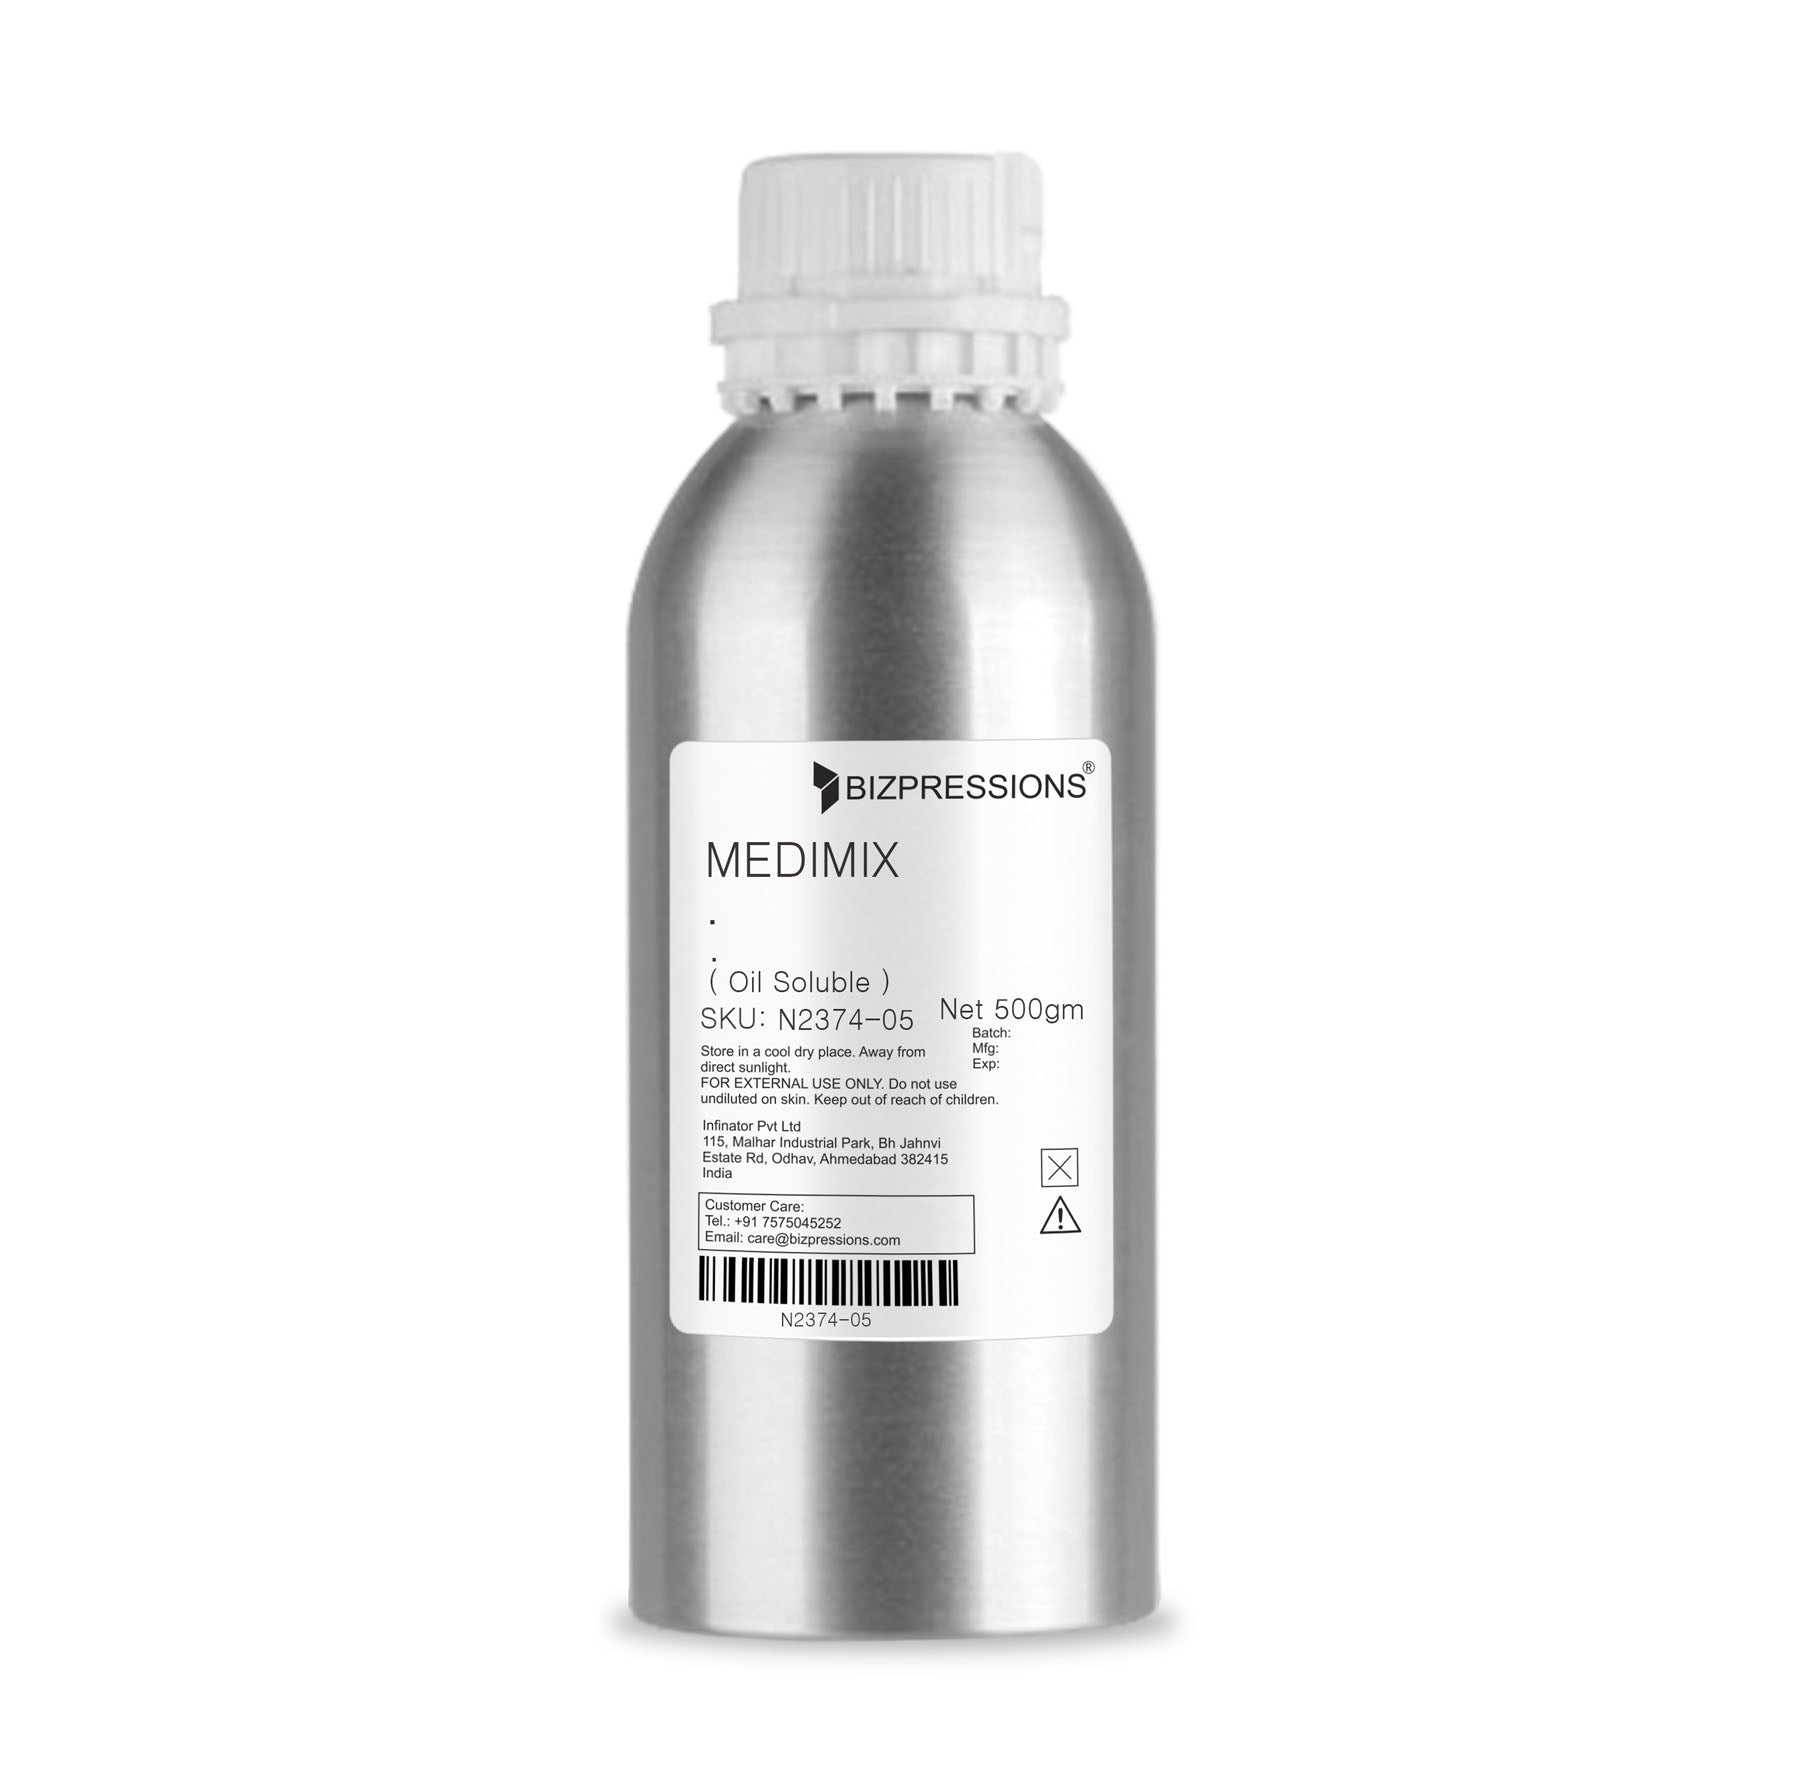 MEDIMIX - Fragrance ( Oil Soluble ) - 500 gm